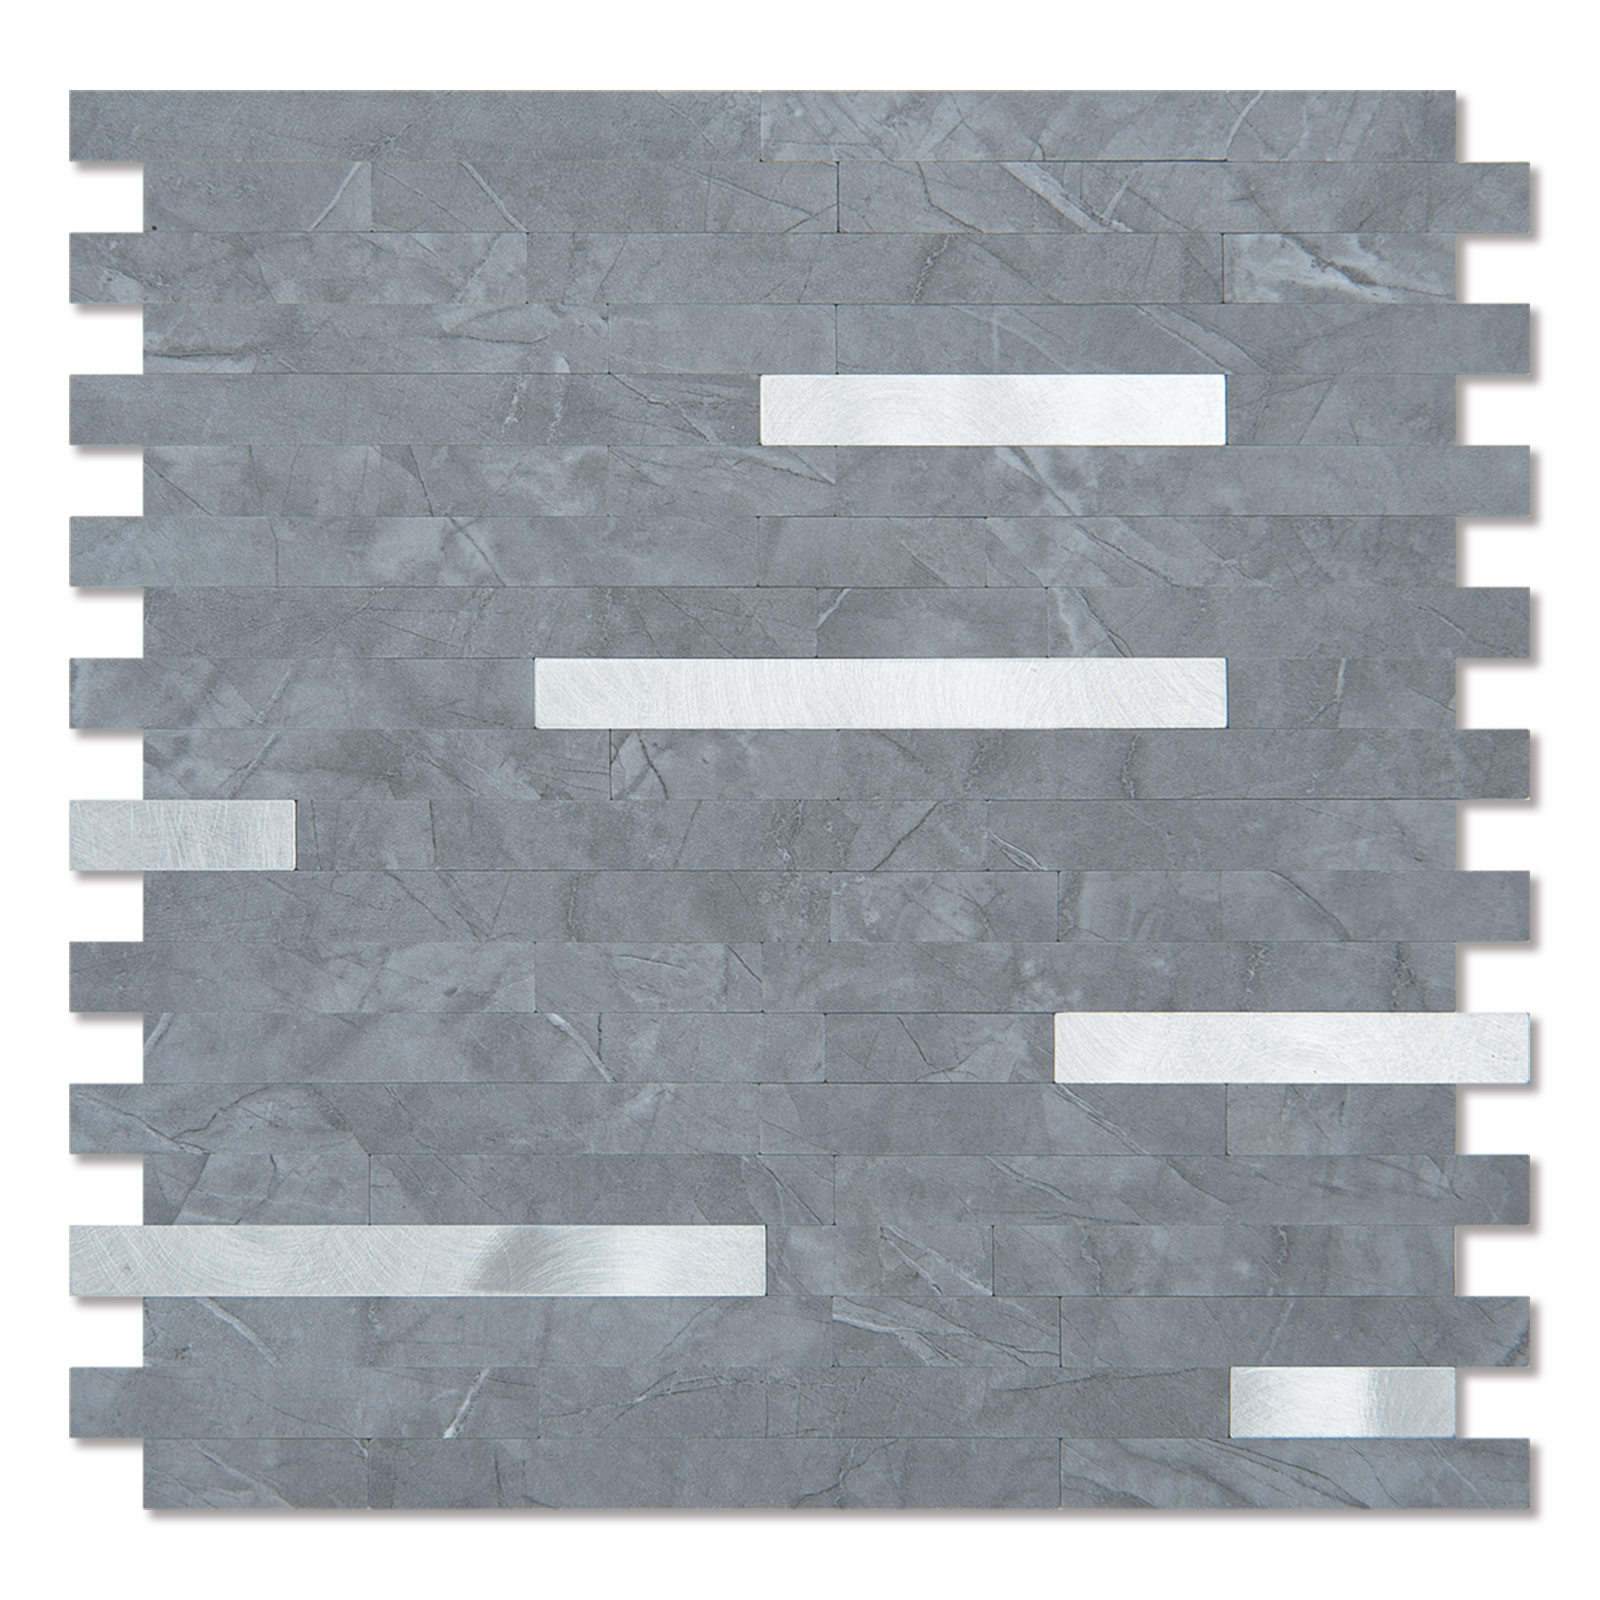 A16611-Art3d 10-Sheet Peel and Stick Stone Backsplash Tile for Kitchen, Bathroom - Volakas White Embellished with Metal Silver